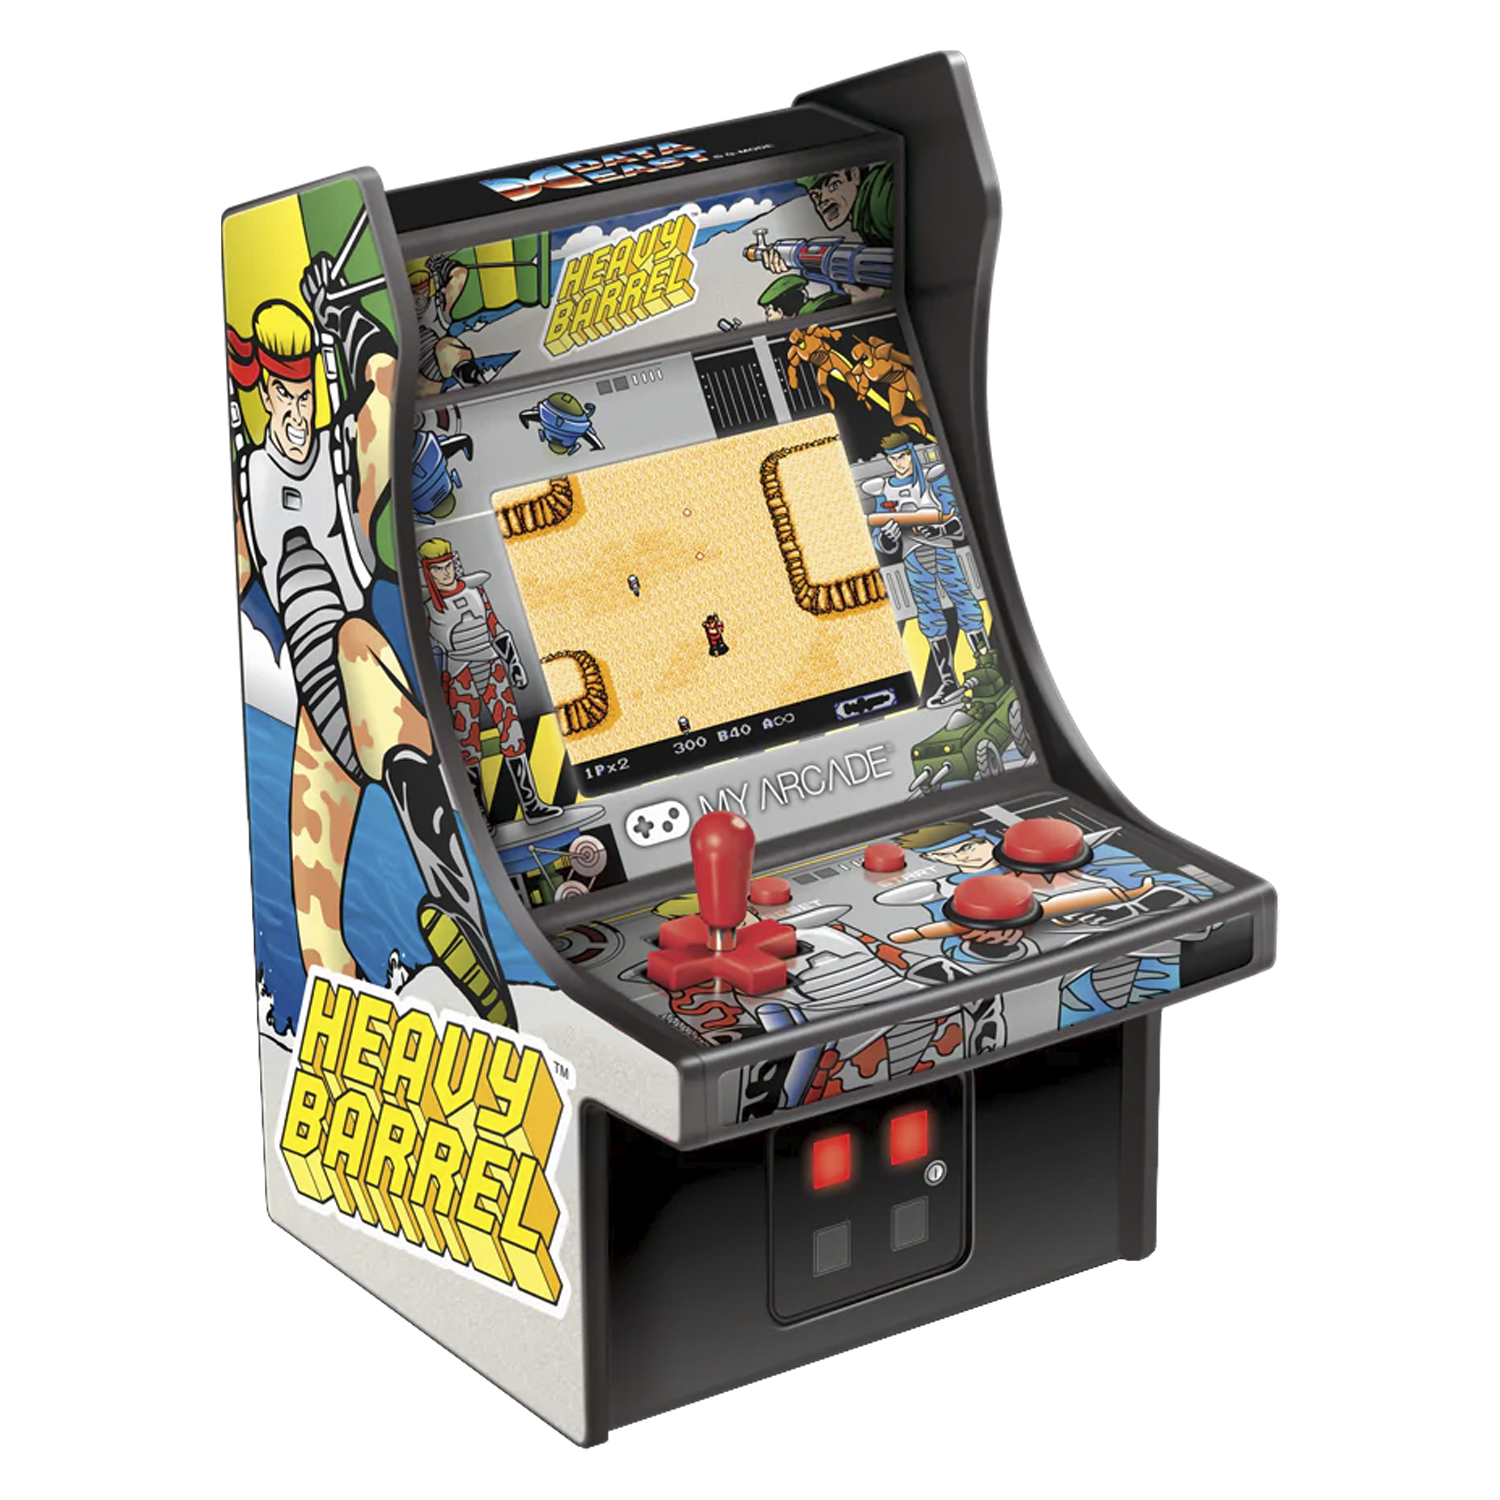 Console My Arcade Heavy Barrel Micro Player - (DGUNL-3205)